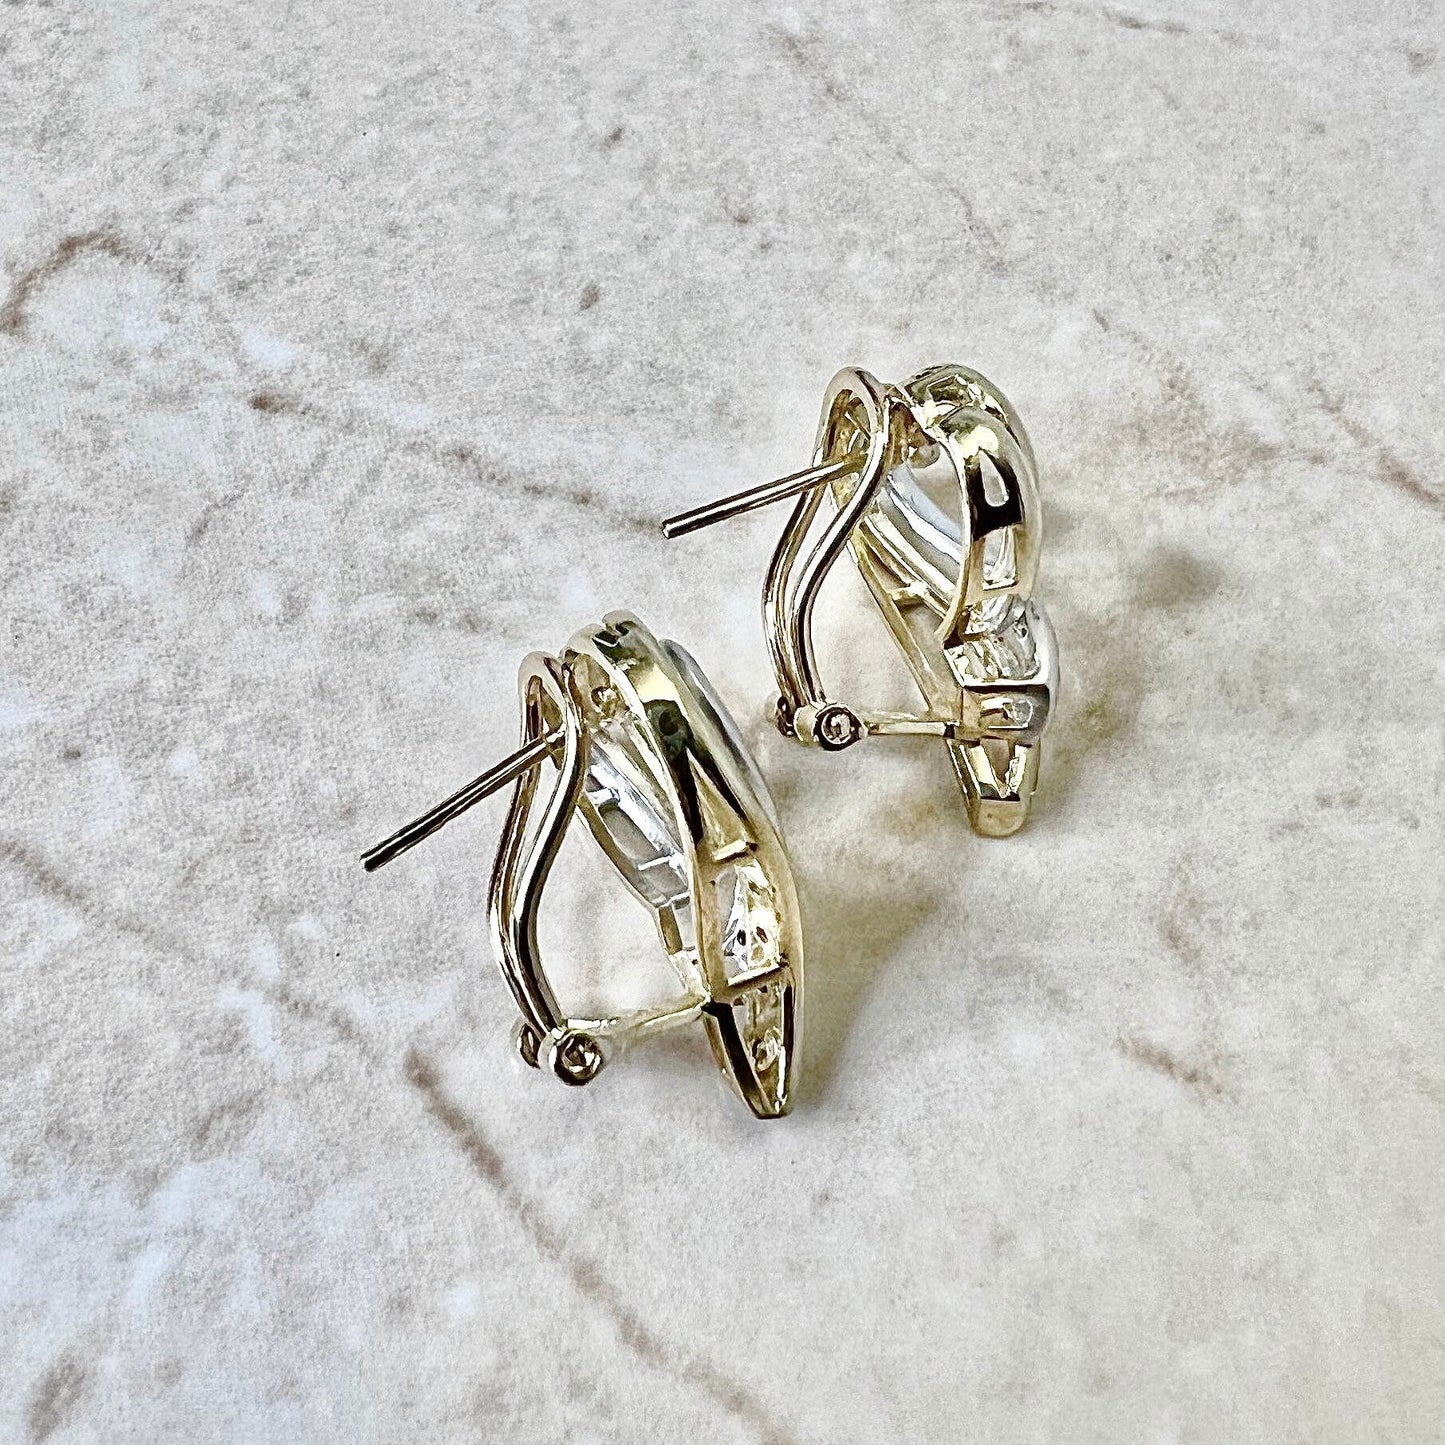 Vintage 14K Diamond Heart Stud Earrings - Two Tone Gold Earrings - Birthday Gift - Christmas Gift - Holiday Gift - Anniversary Gift